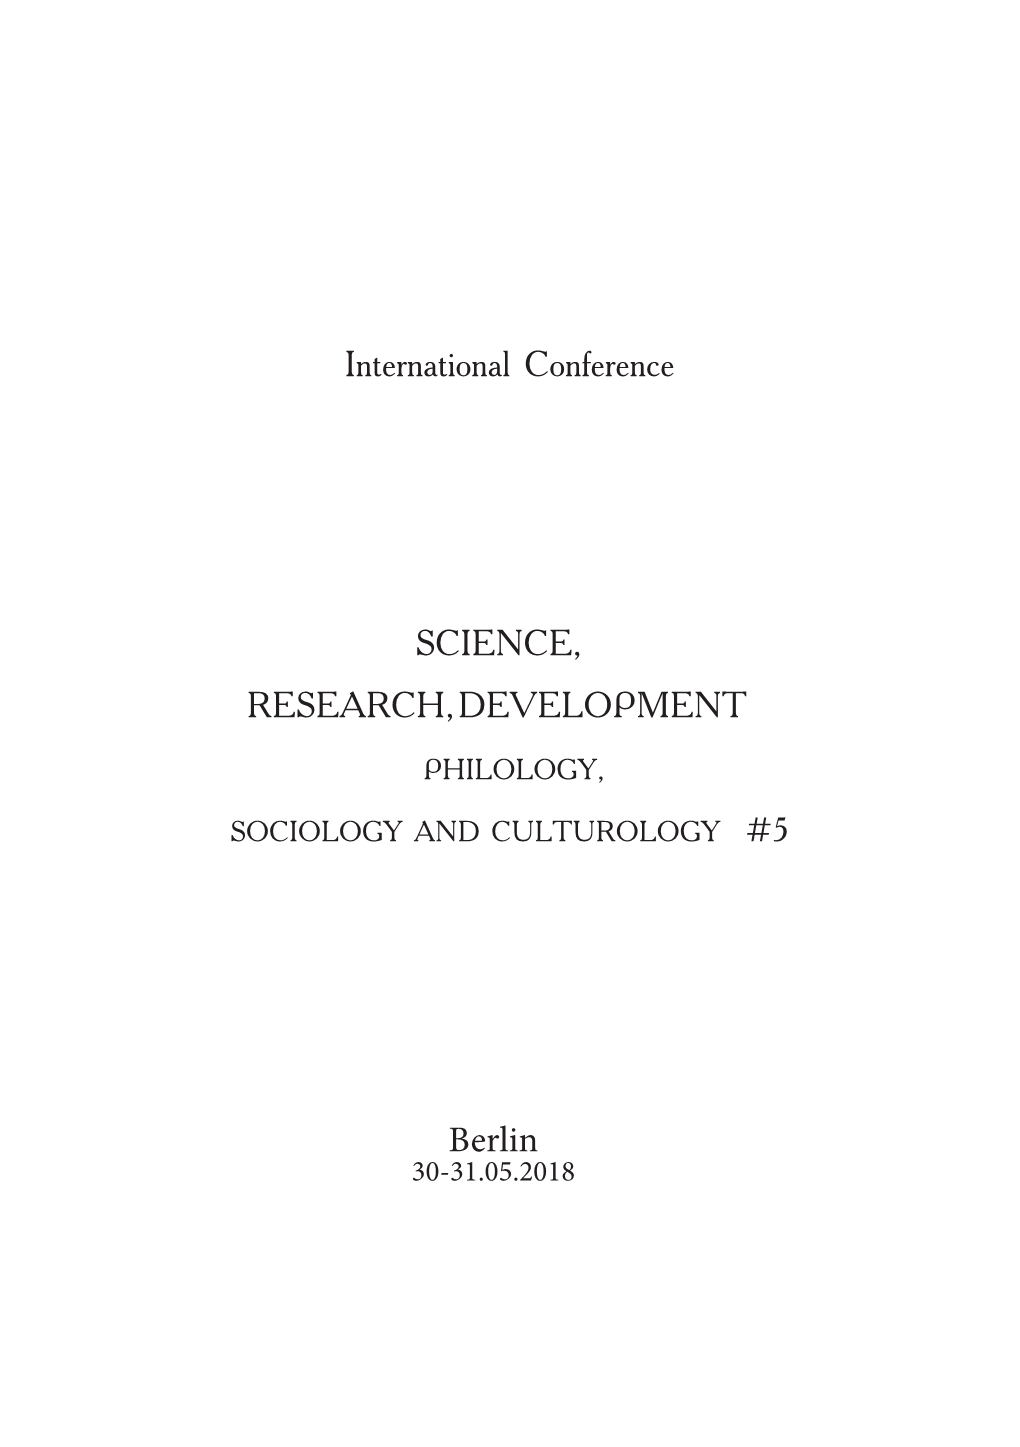 International Conference SCIENCE, RESEARCH, DEVELOPMENT Berlin